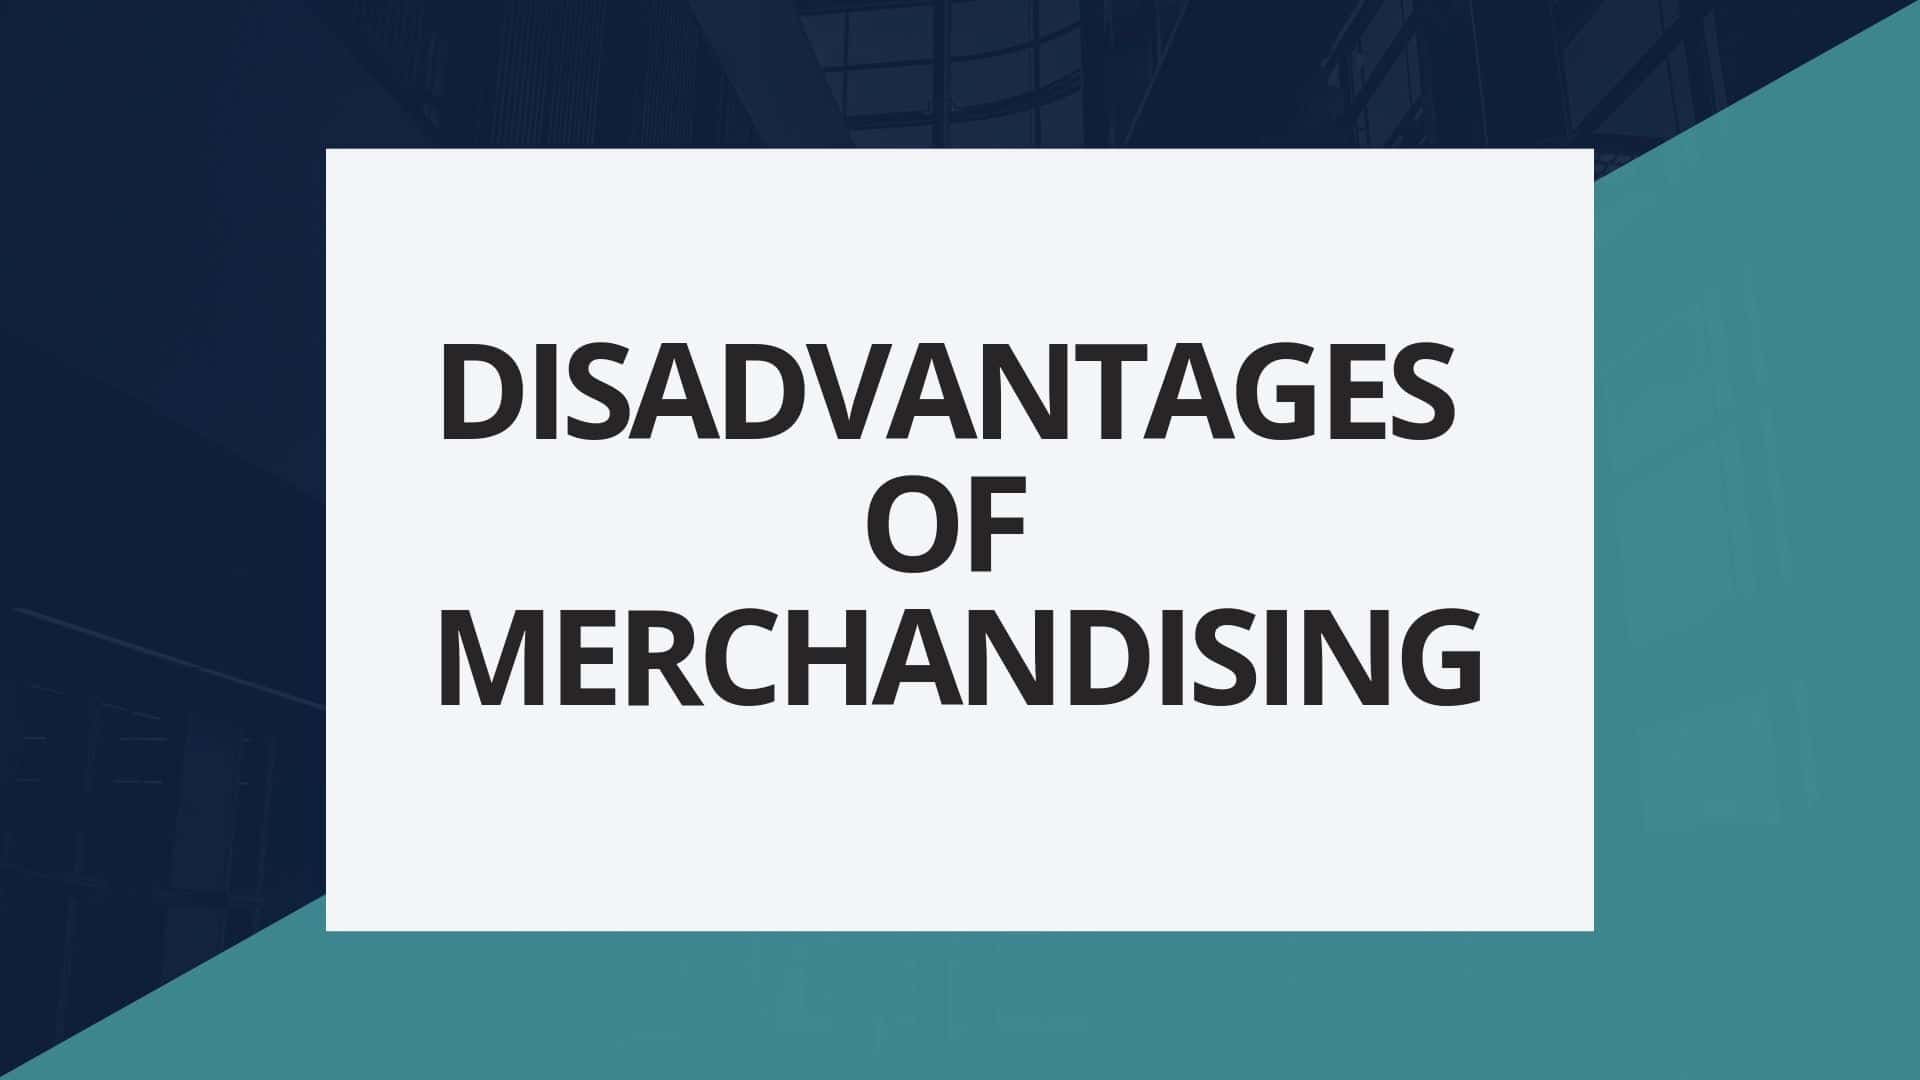 Disadvantages of merchandising